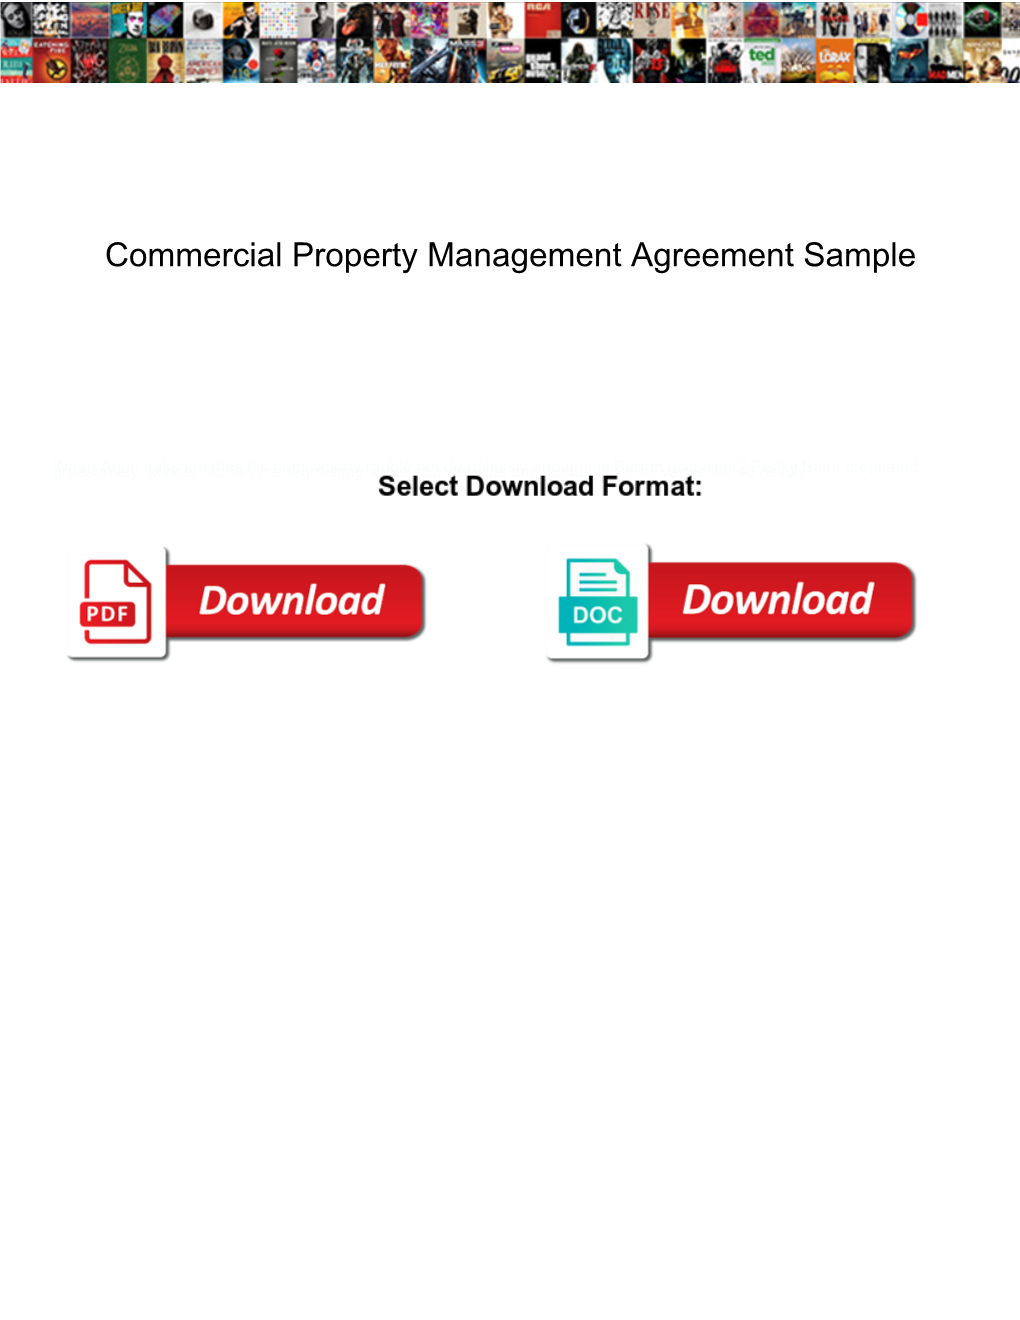 Commercial Property Management Agreement Sample